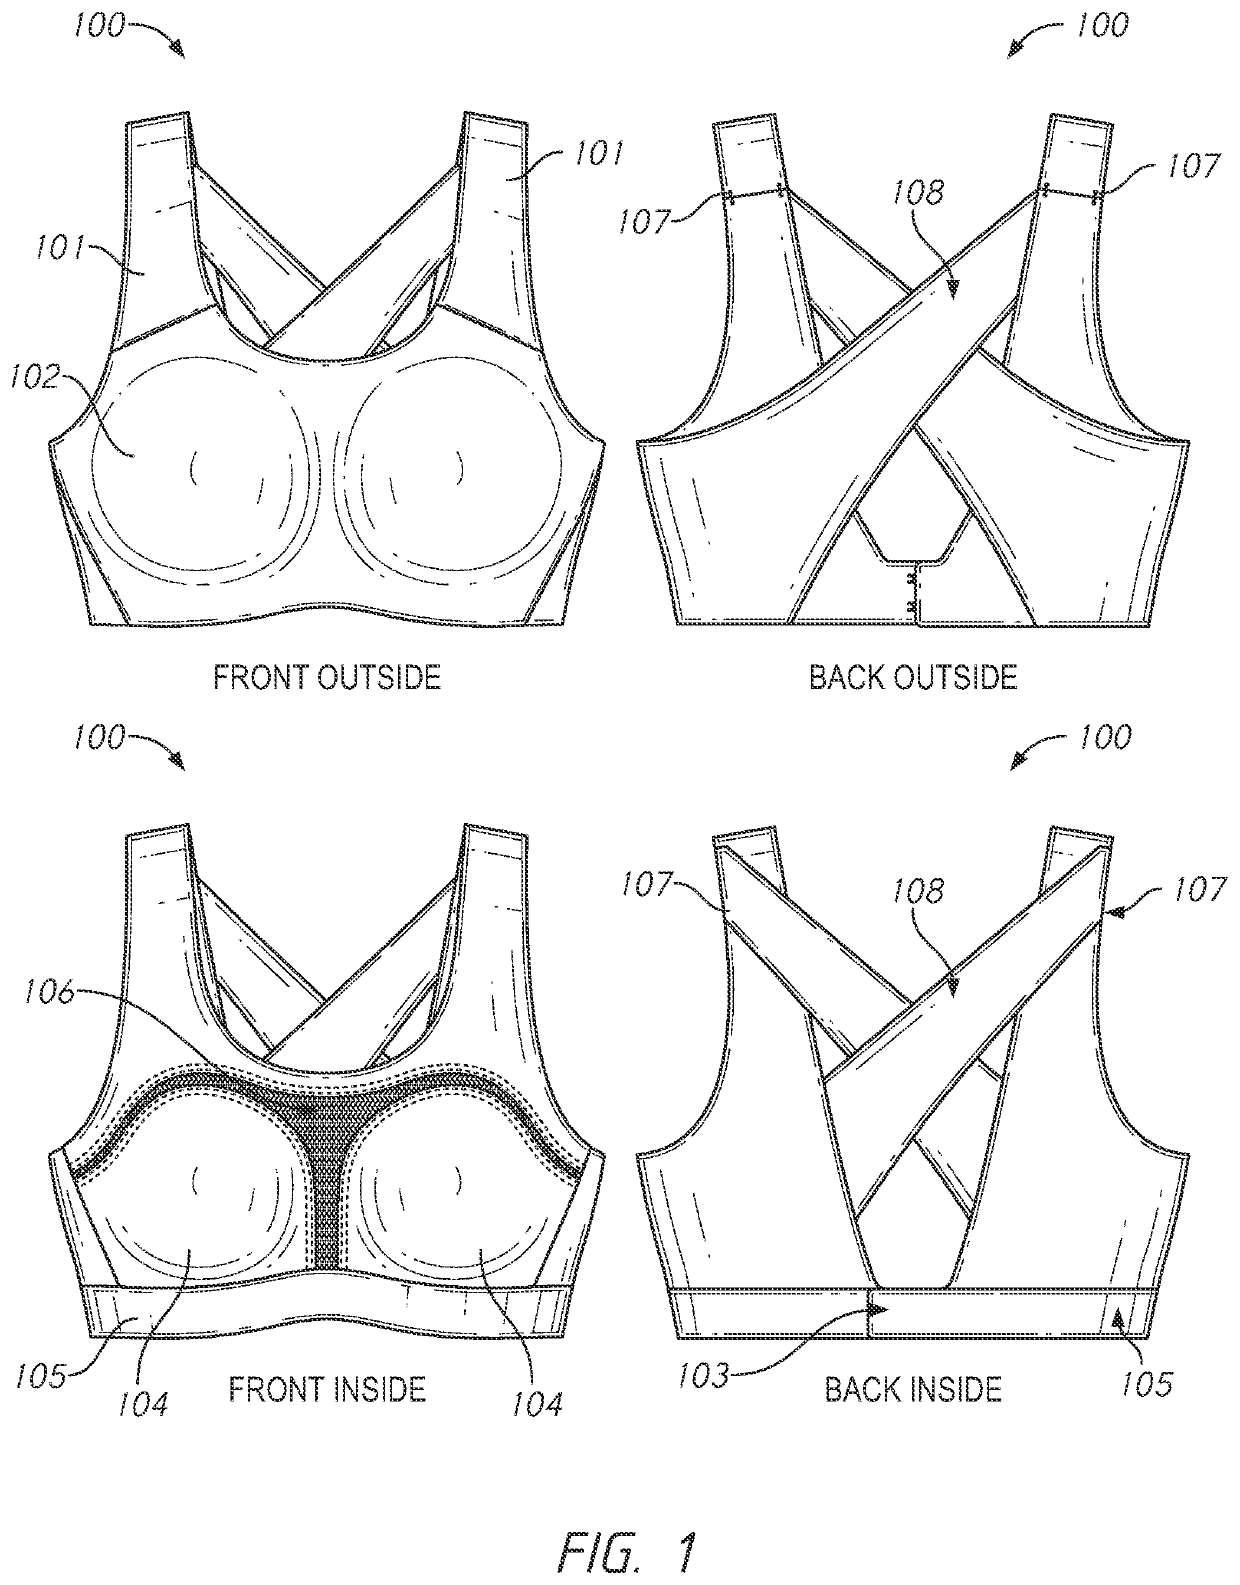 Pressure-distributing undergarment with fastening system